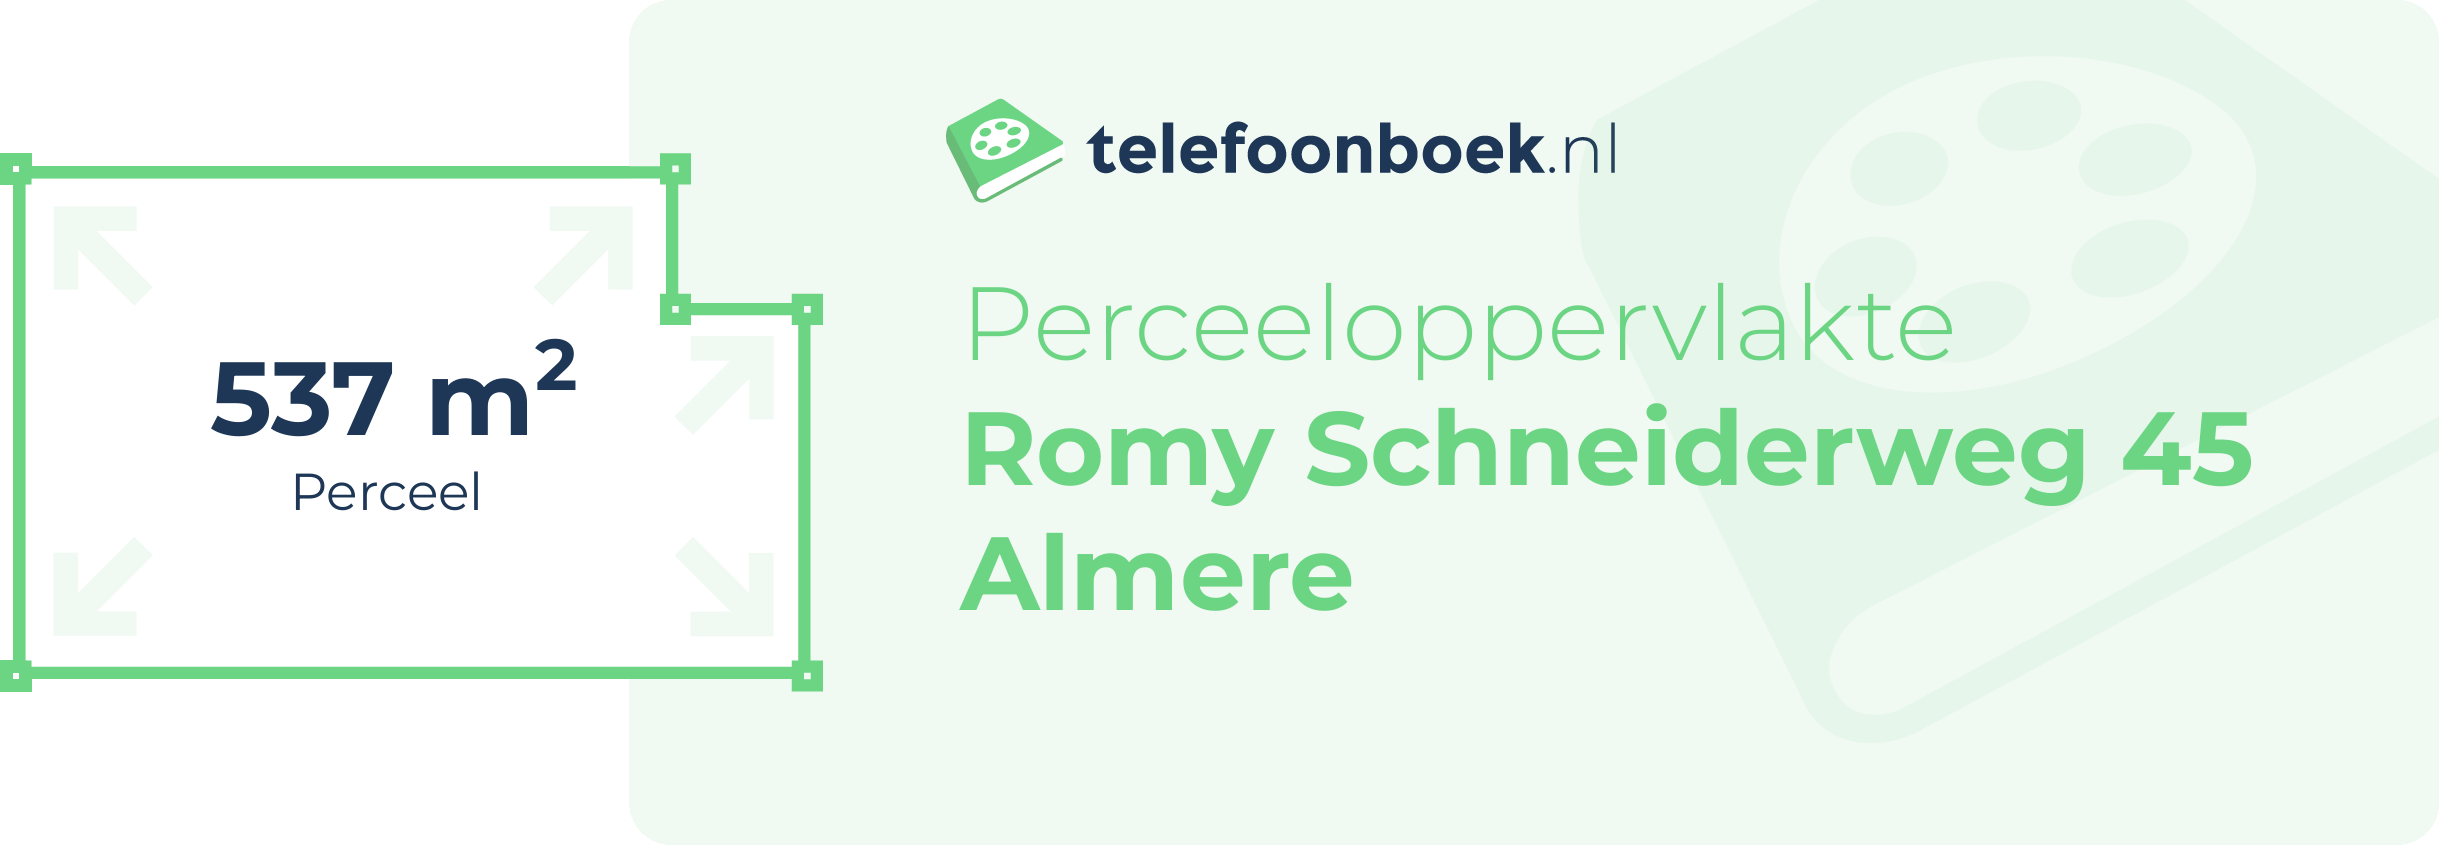 Perceeloppervlakte Romy Schneiderweg 45 Almere